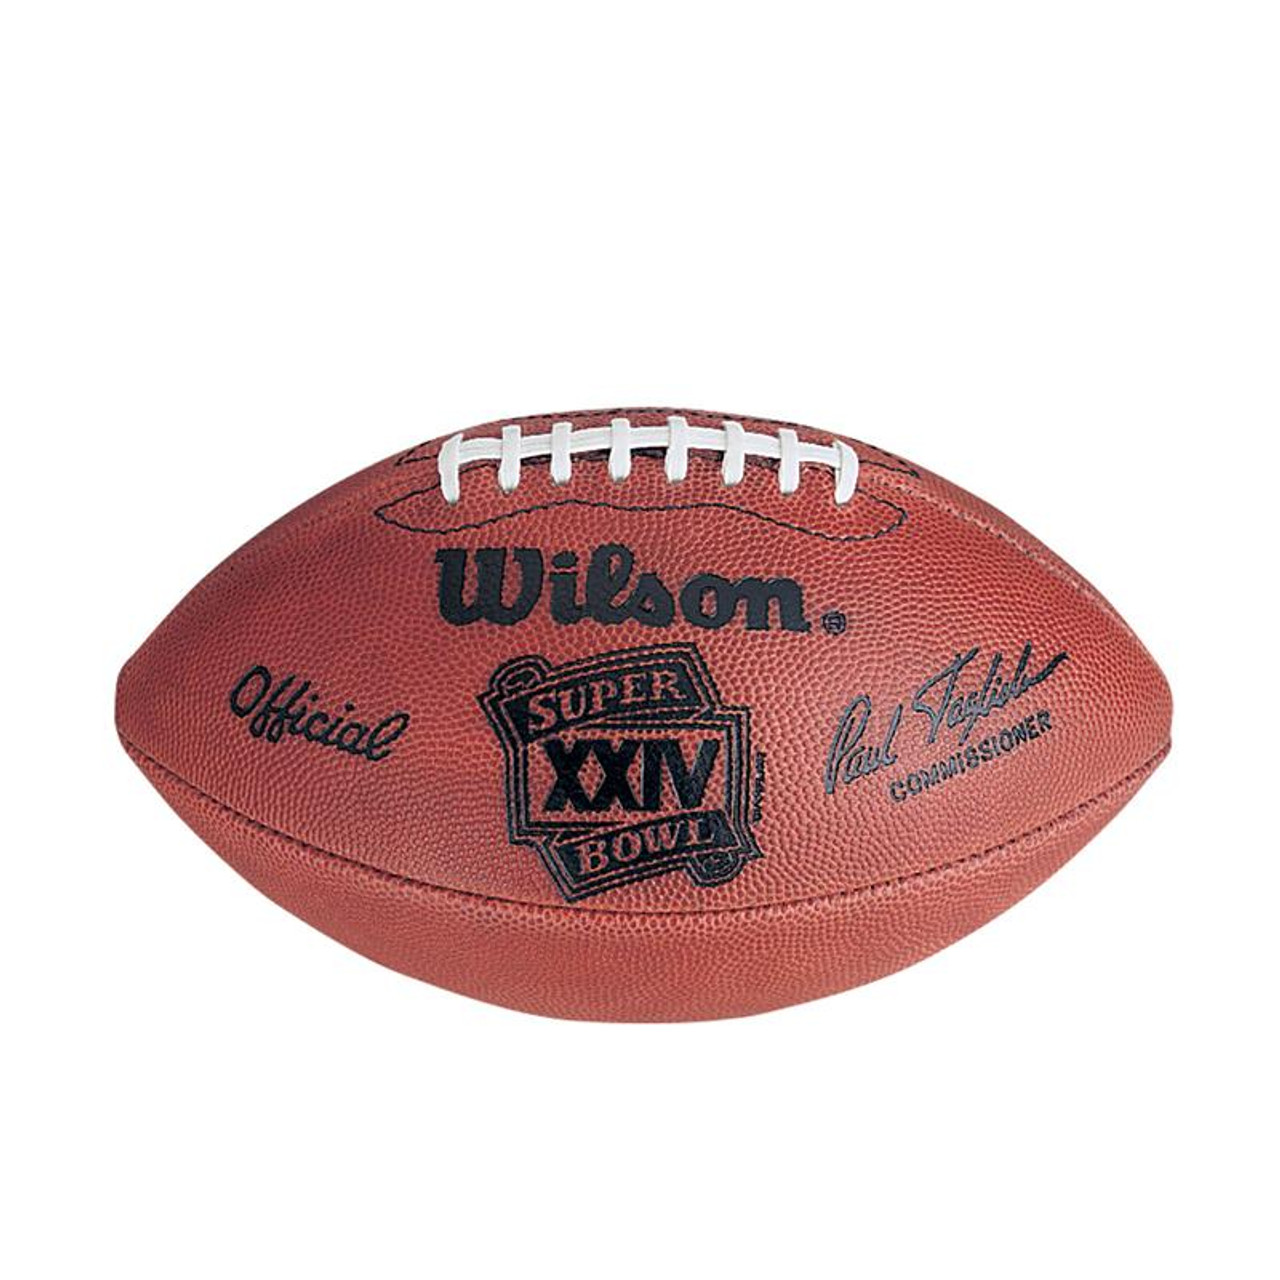 Super Bowl XXIV (Twenty-Four 24) San Francisco 49ers vs. Denver Broncos  Official Leather Authentic Game Football by Wilson